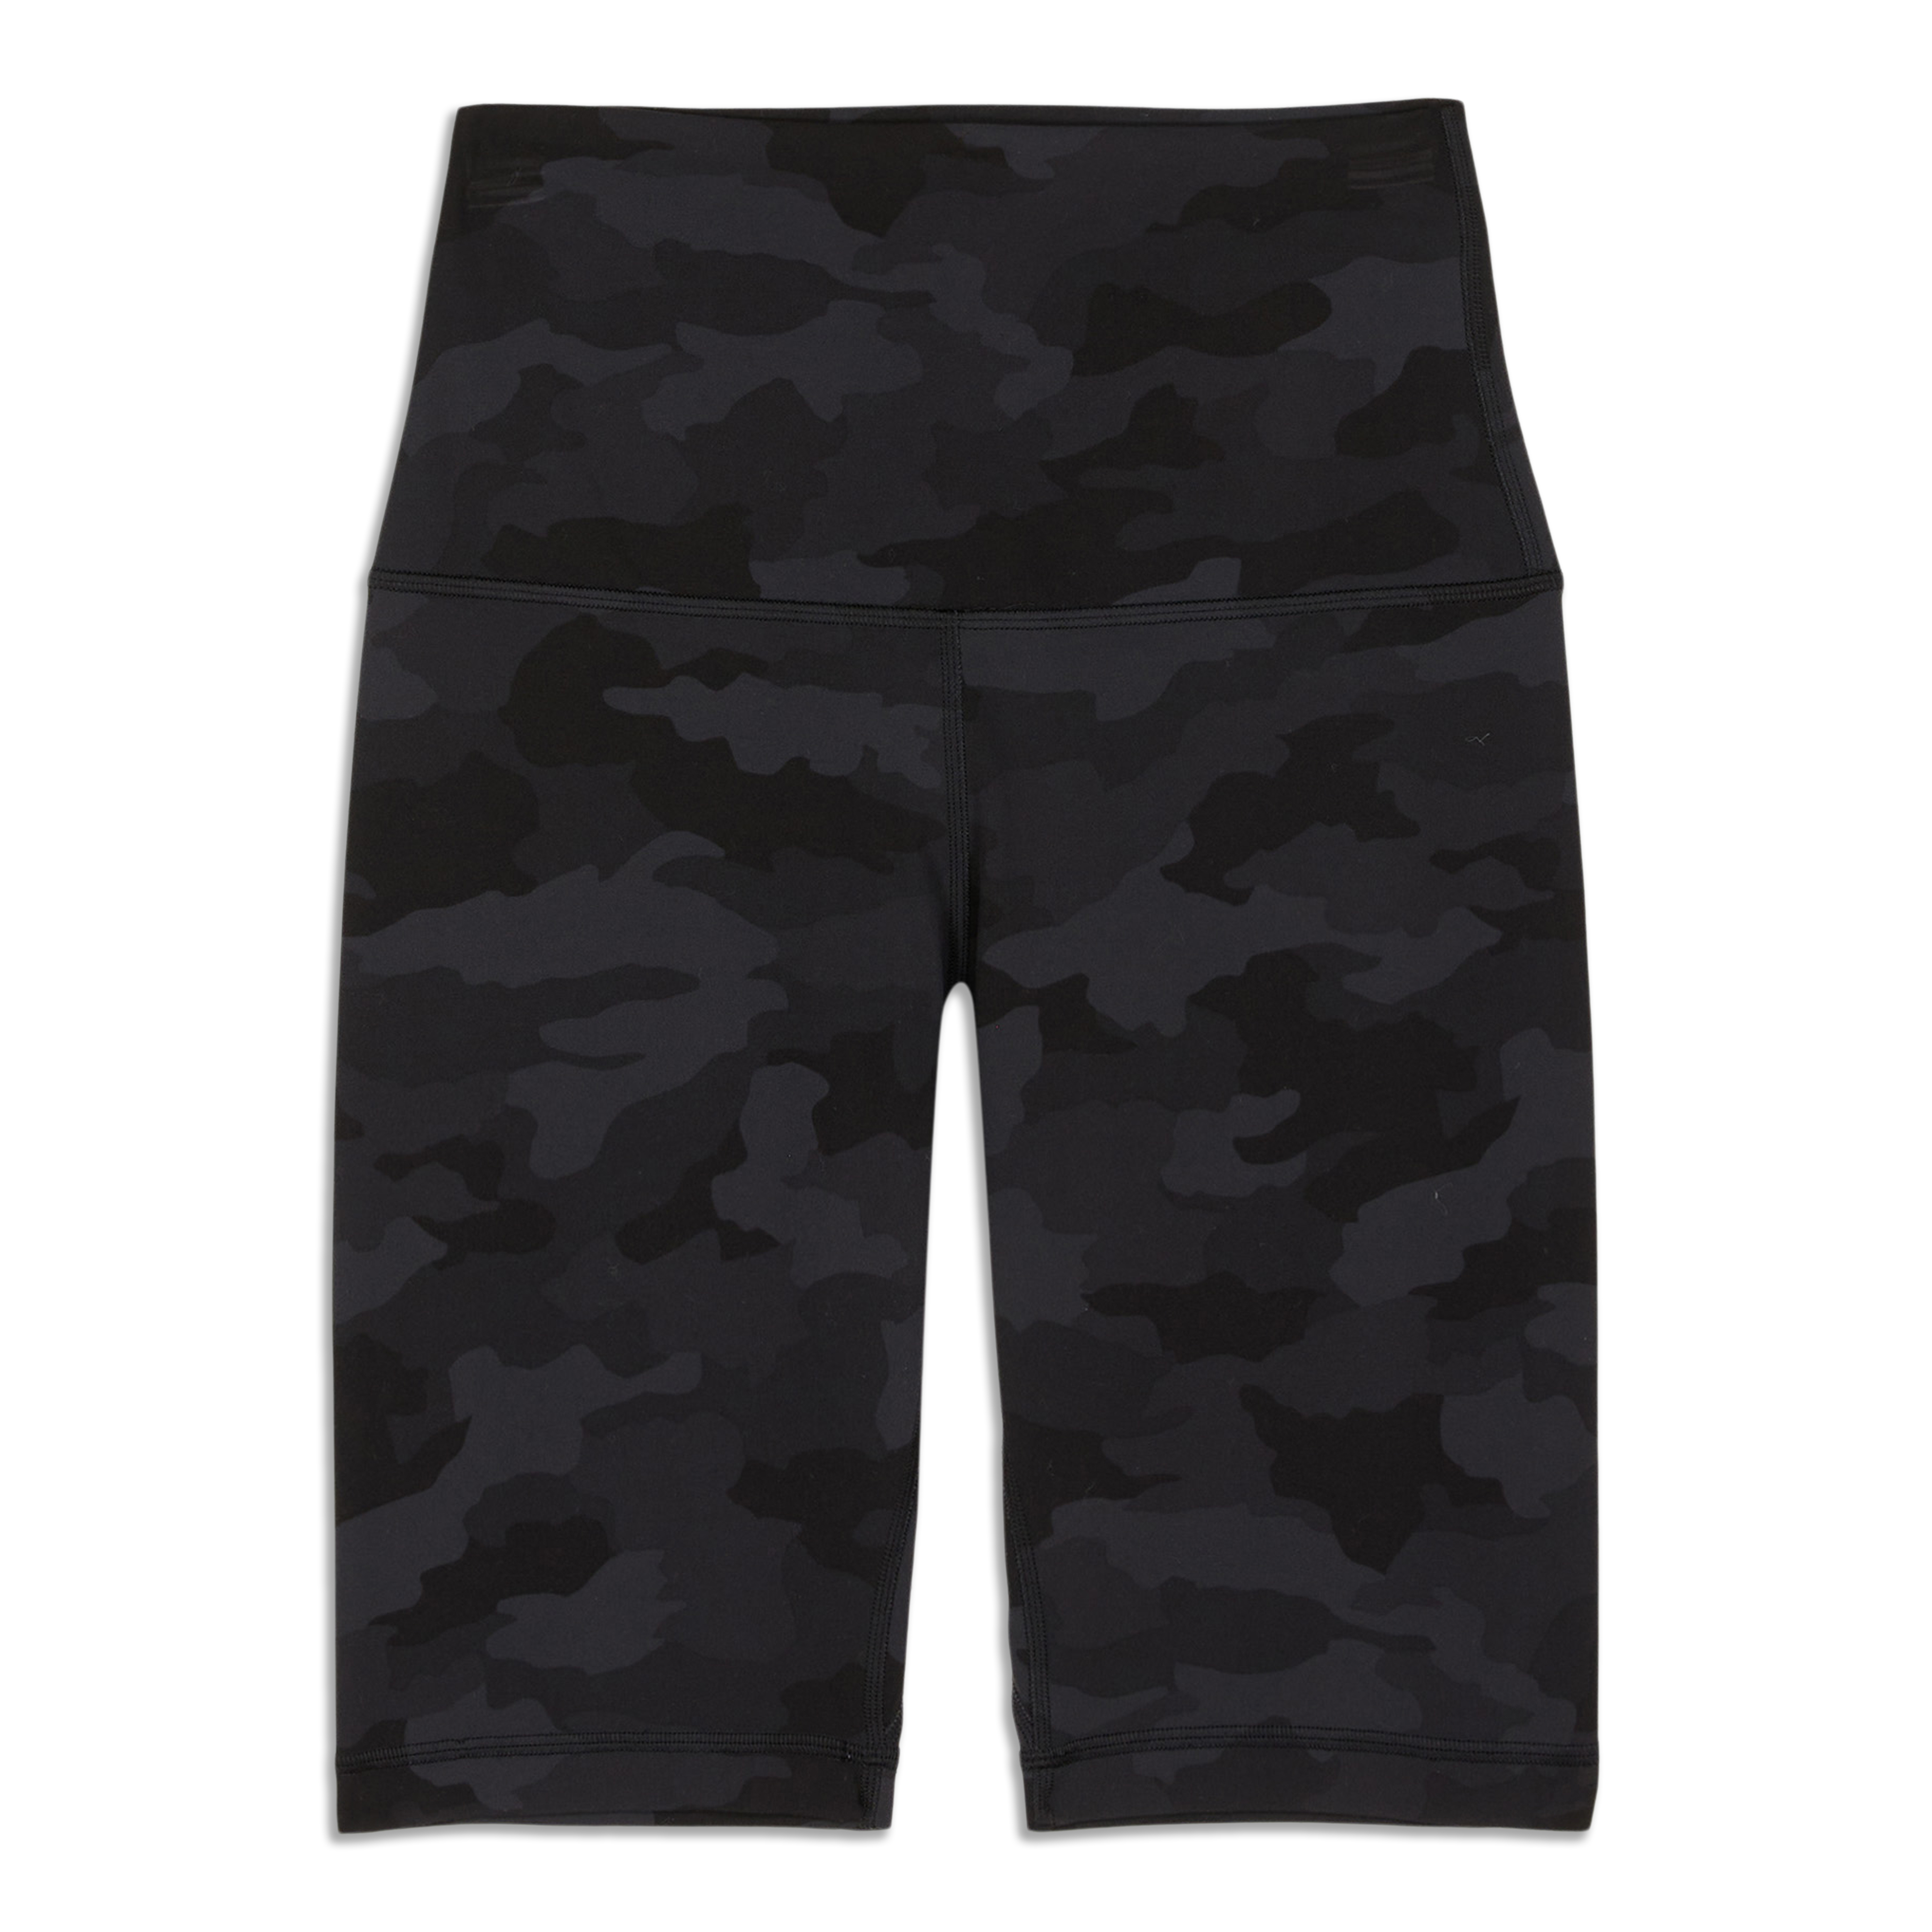 NWT Lululemon align super high rise shorts 10 inseam size 4 incognito  camo multi grey color for Sale in Union City, CA - OfferUp